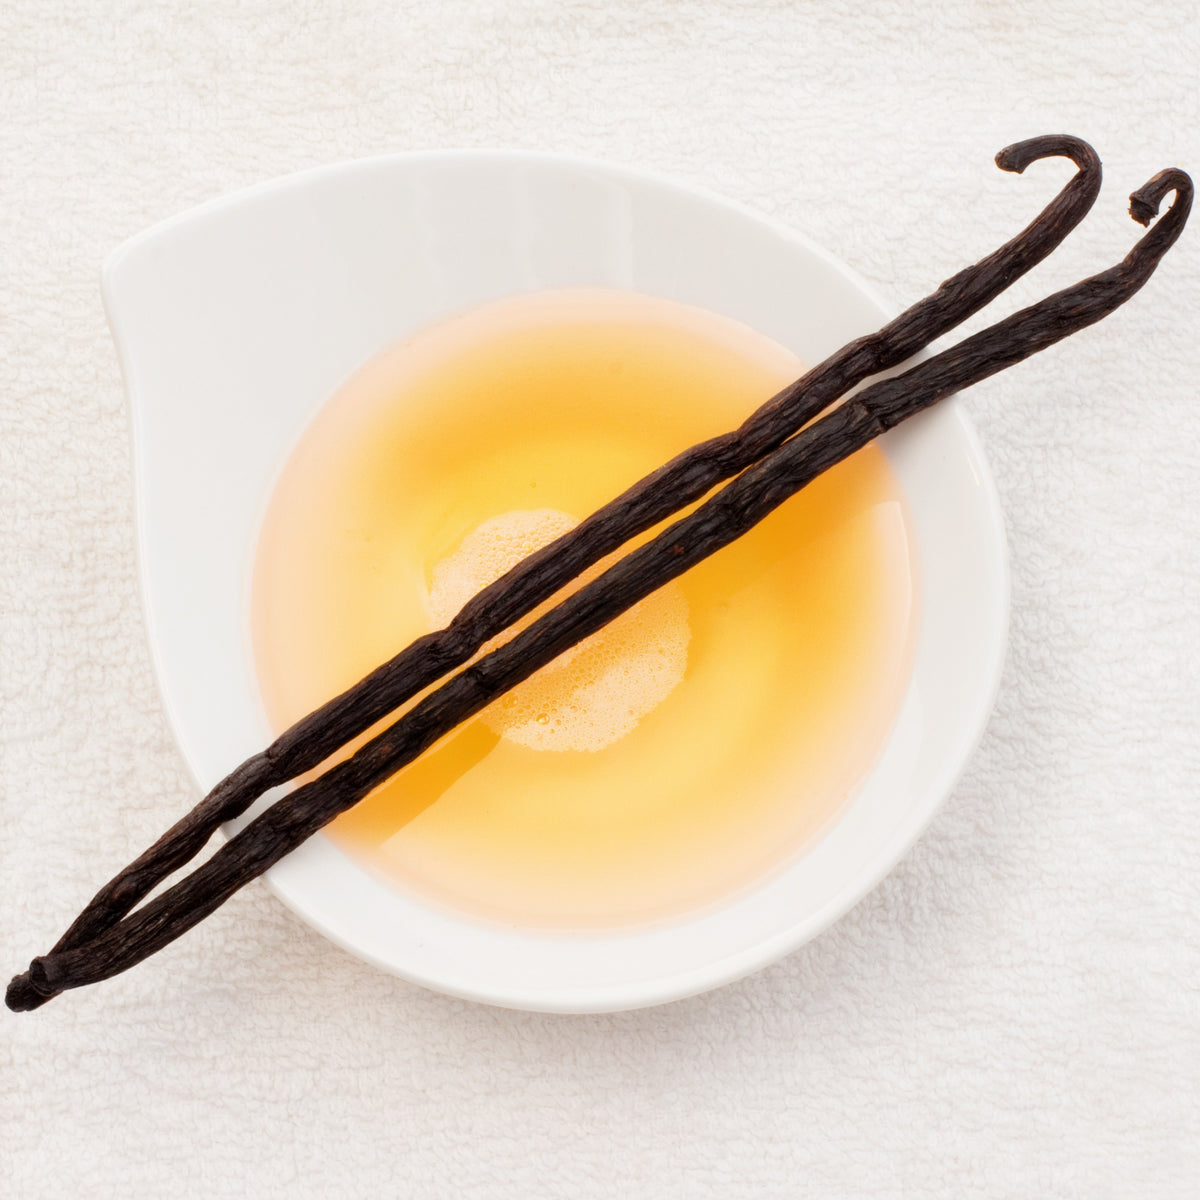 Warm Vanilla Sugar type Fragrance Oil – Majestic Mountain Sage, Inc.